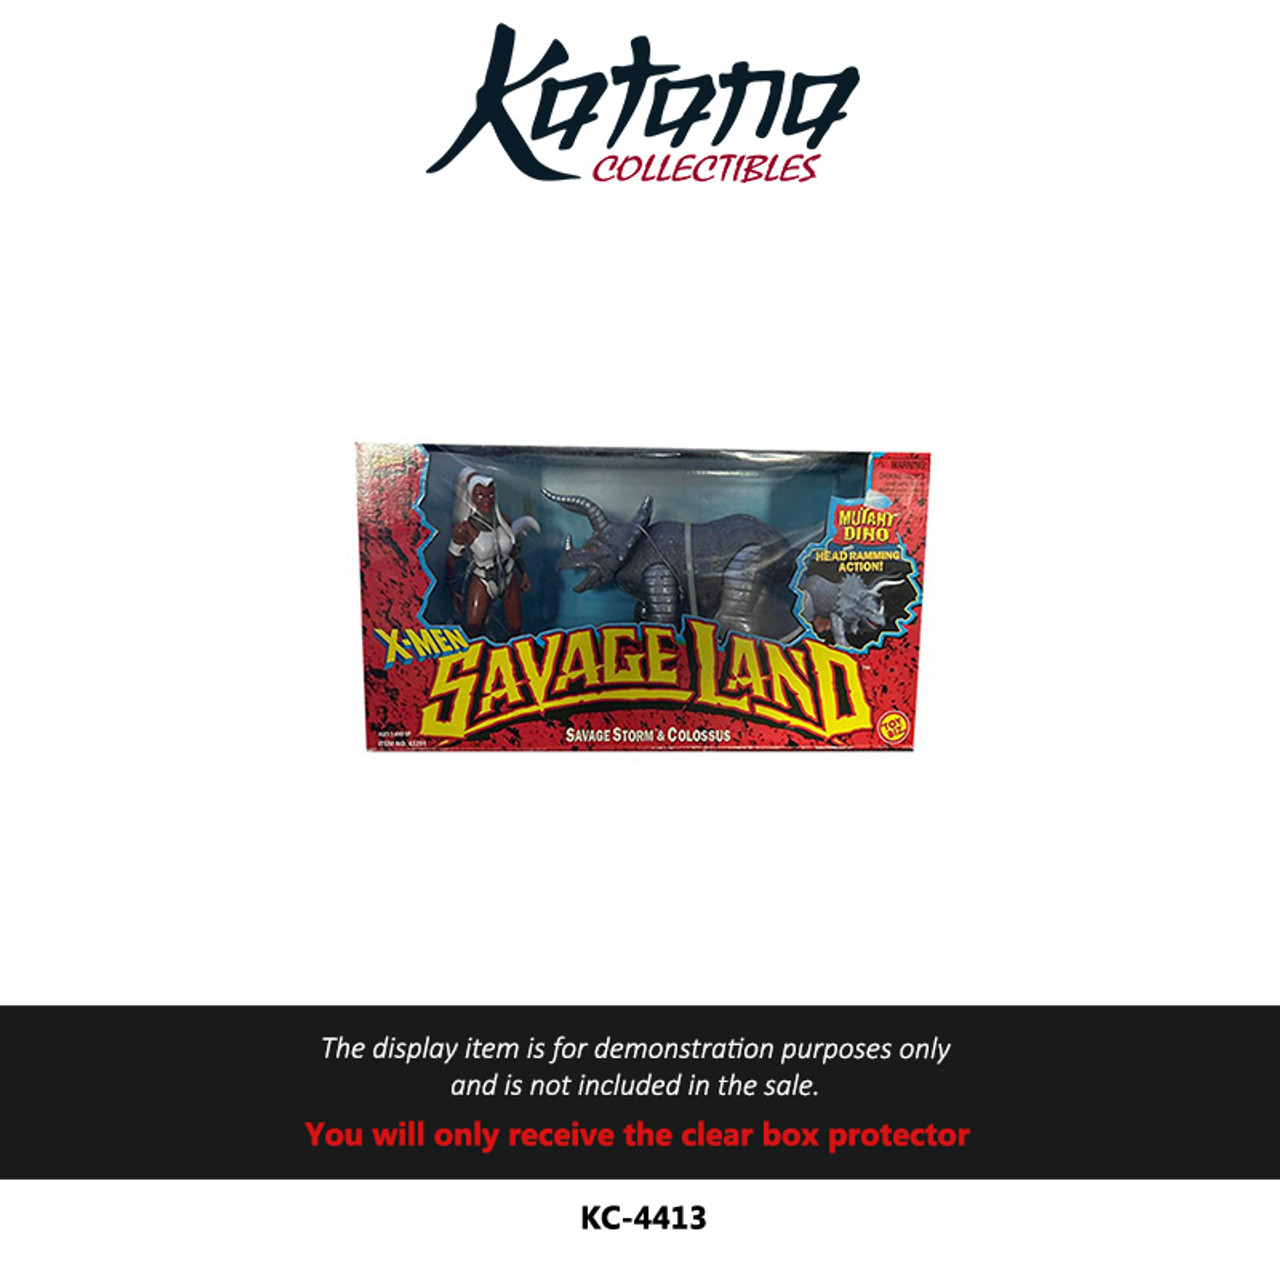 Katana Collectibles Protector For X-Men Savage LandSavage Storm & Colossus